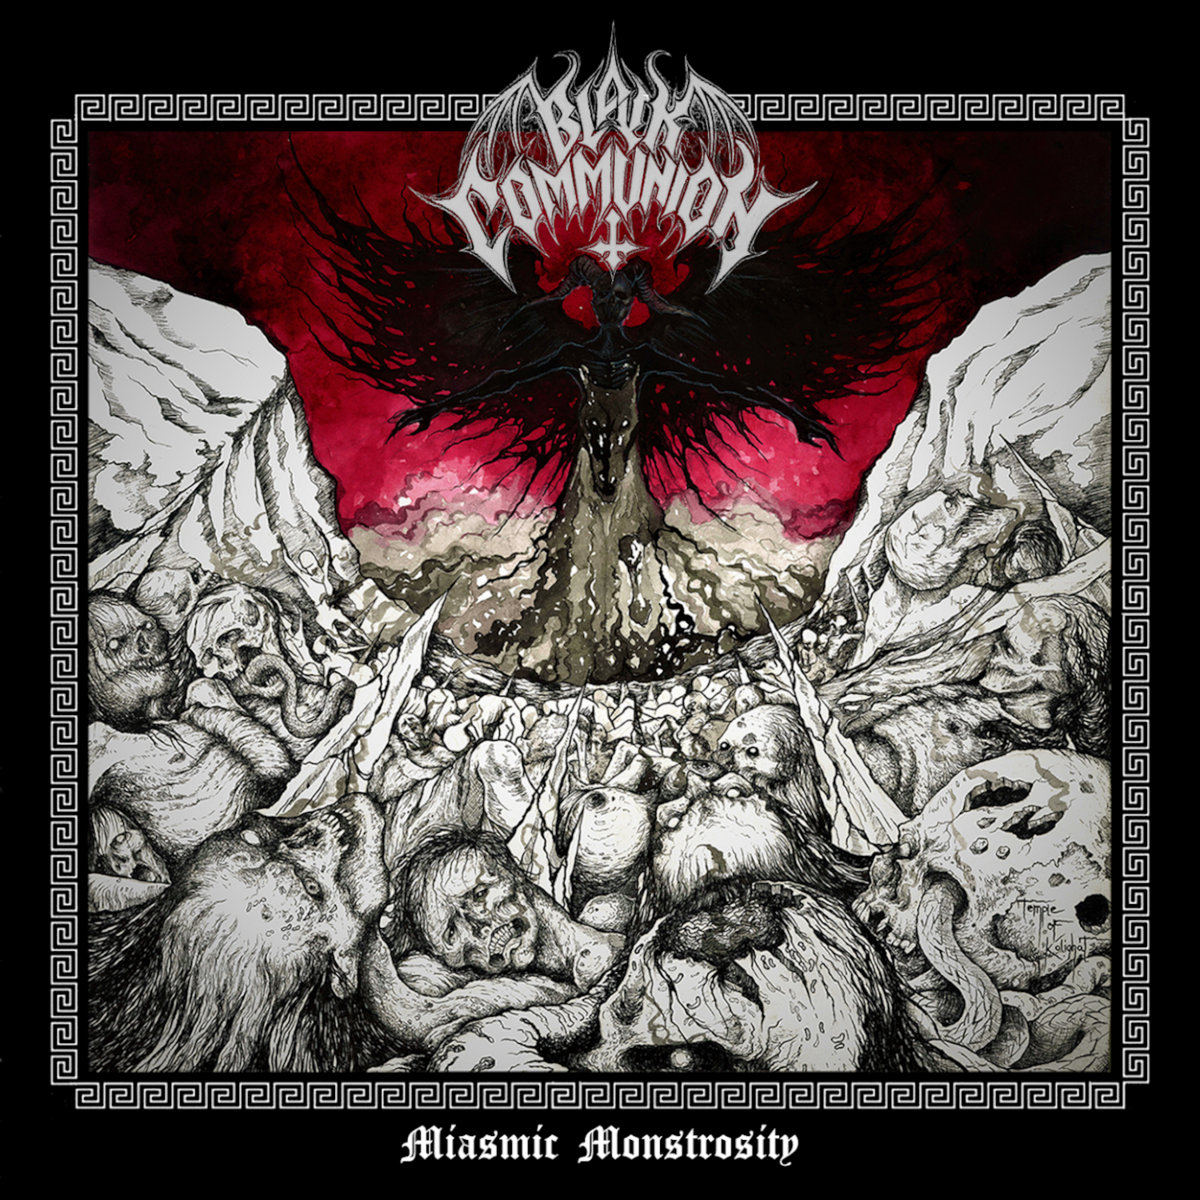 black communion – miasmic monstrosity